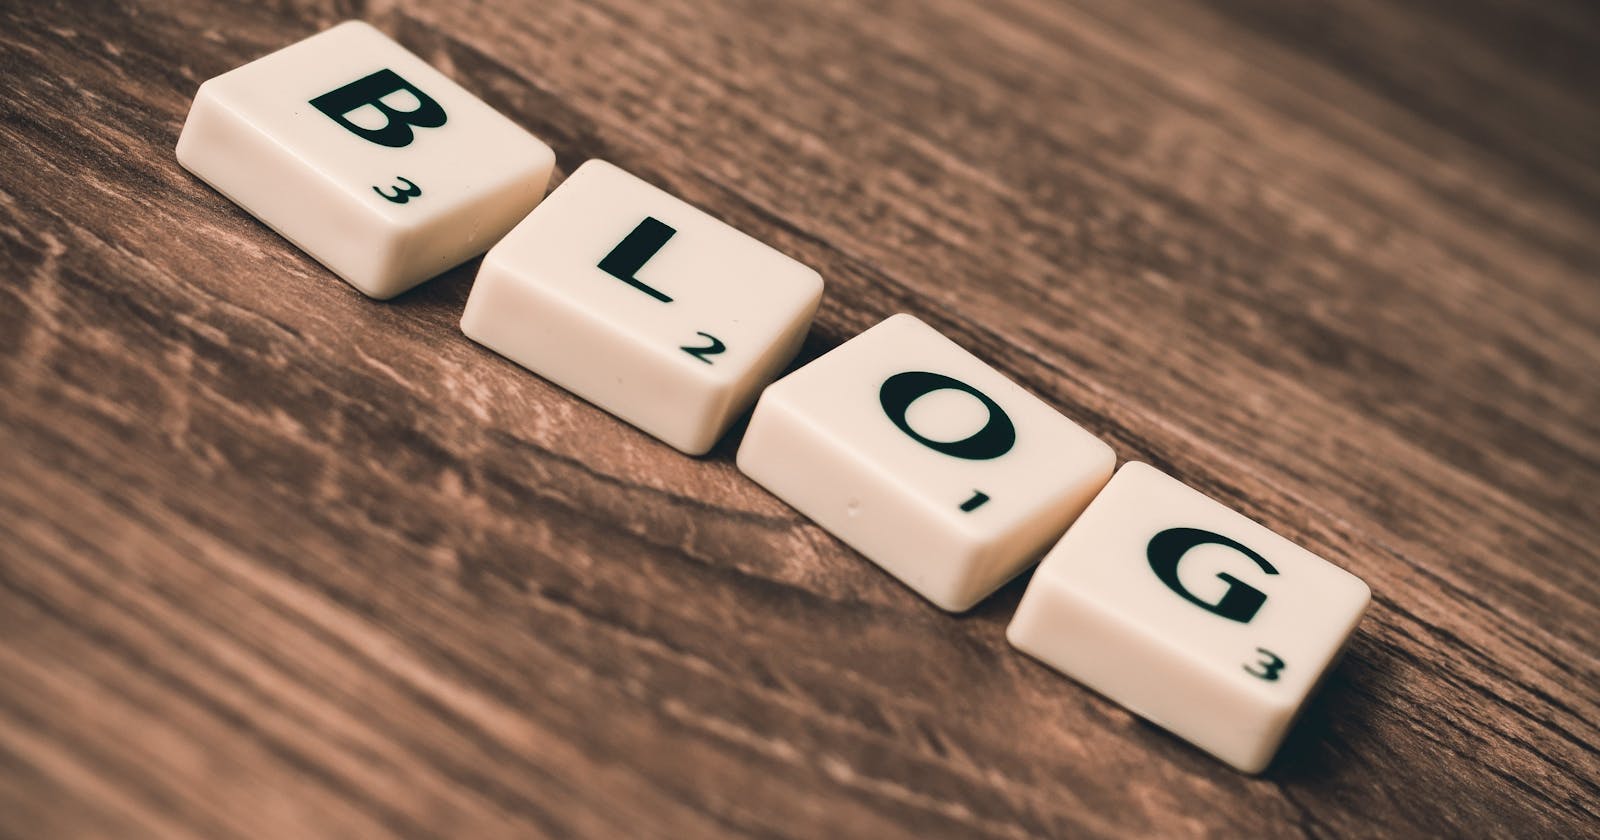 The Blogging API